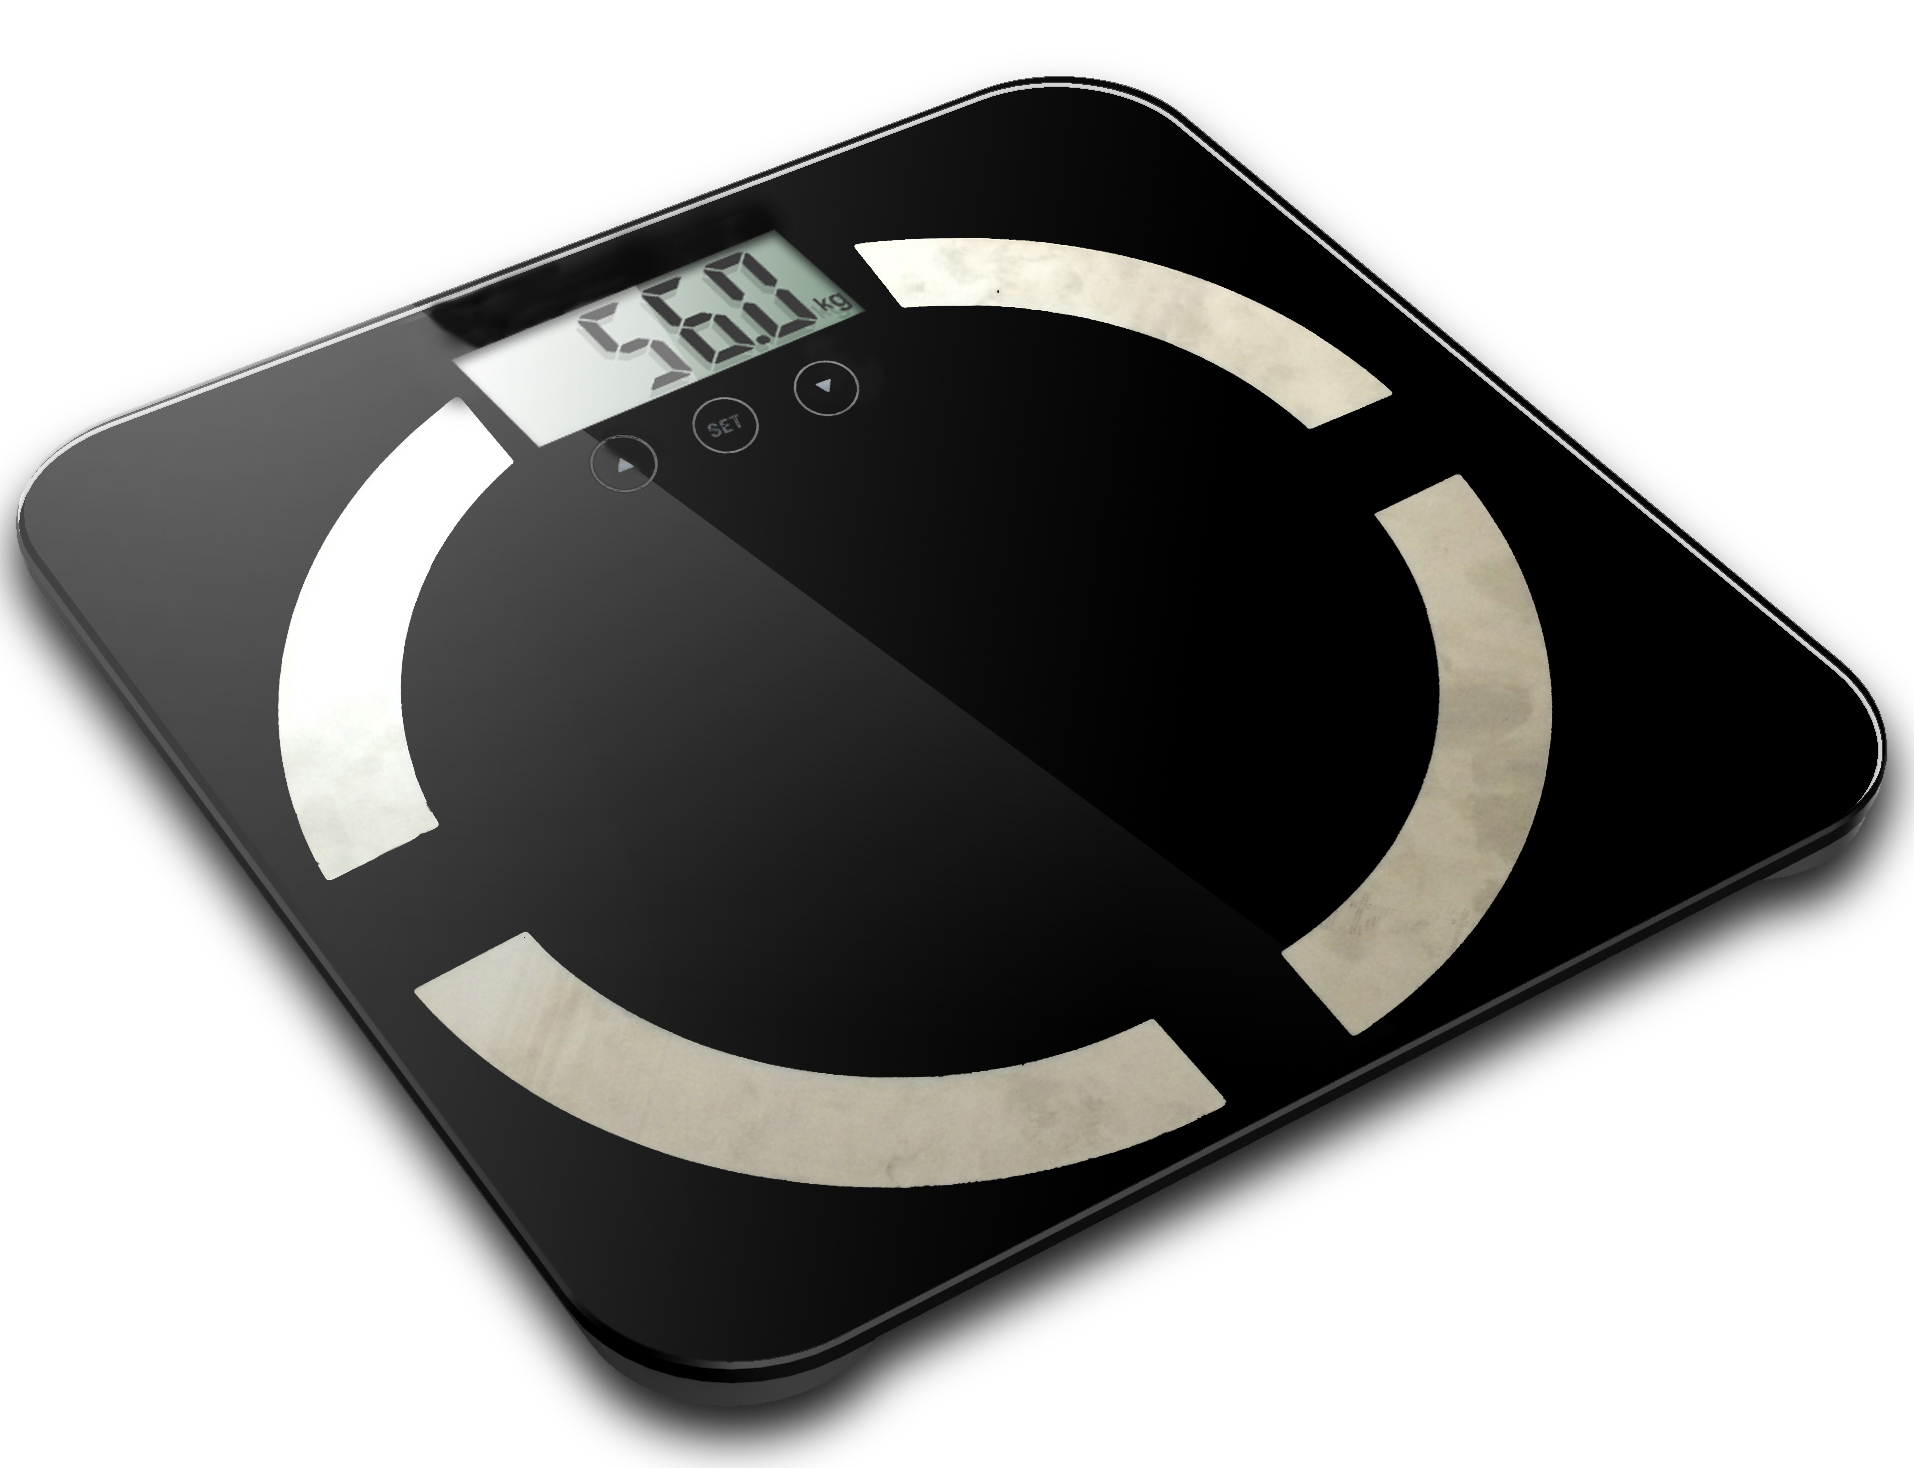 Body fat scale